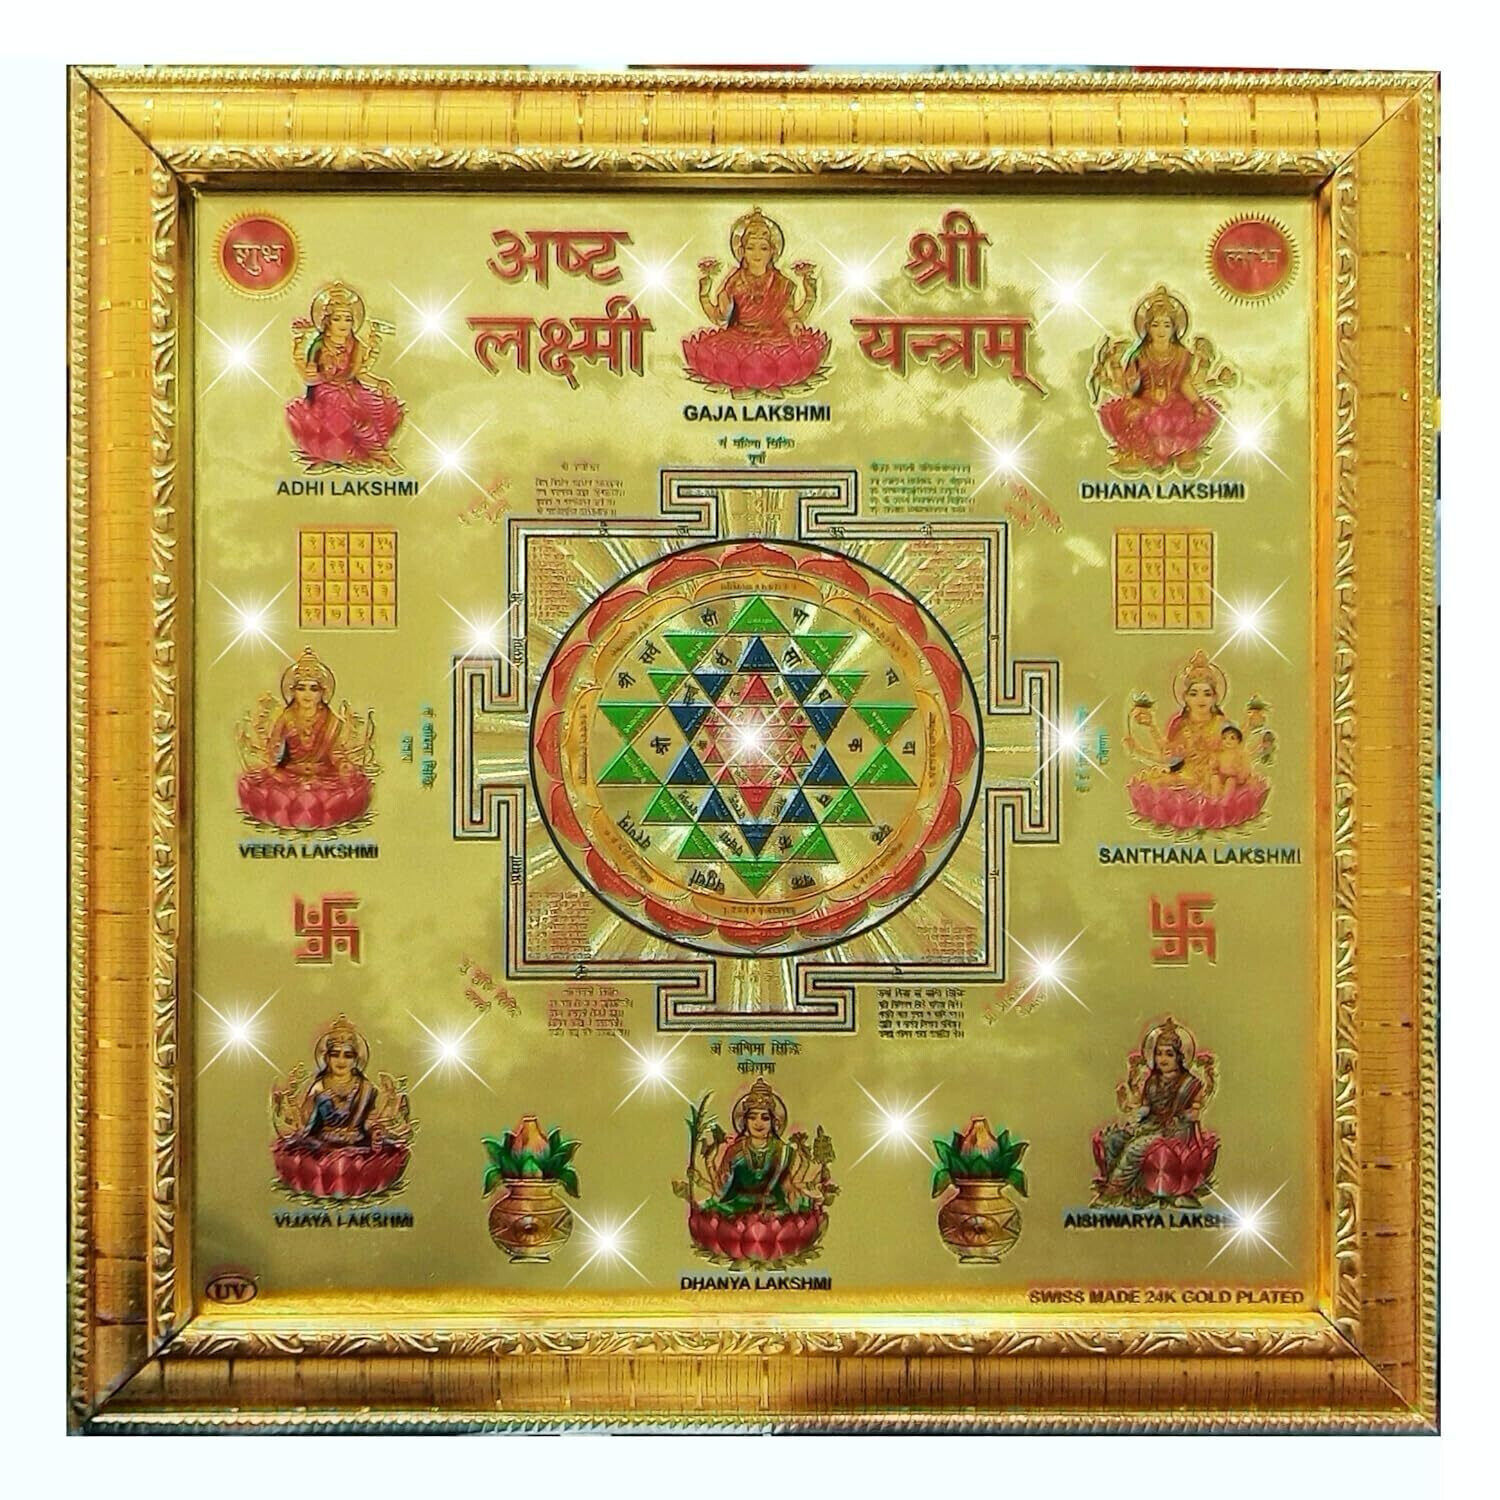 ASHT Lakshmi Shree Yantra 24ct Gold Plated Yantra in Wooden Frame (21x21 cm